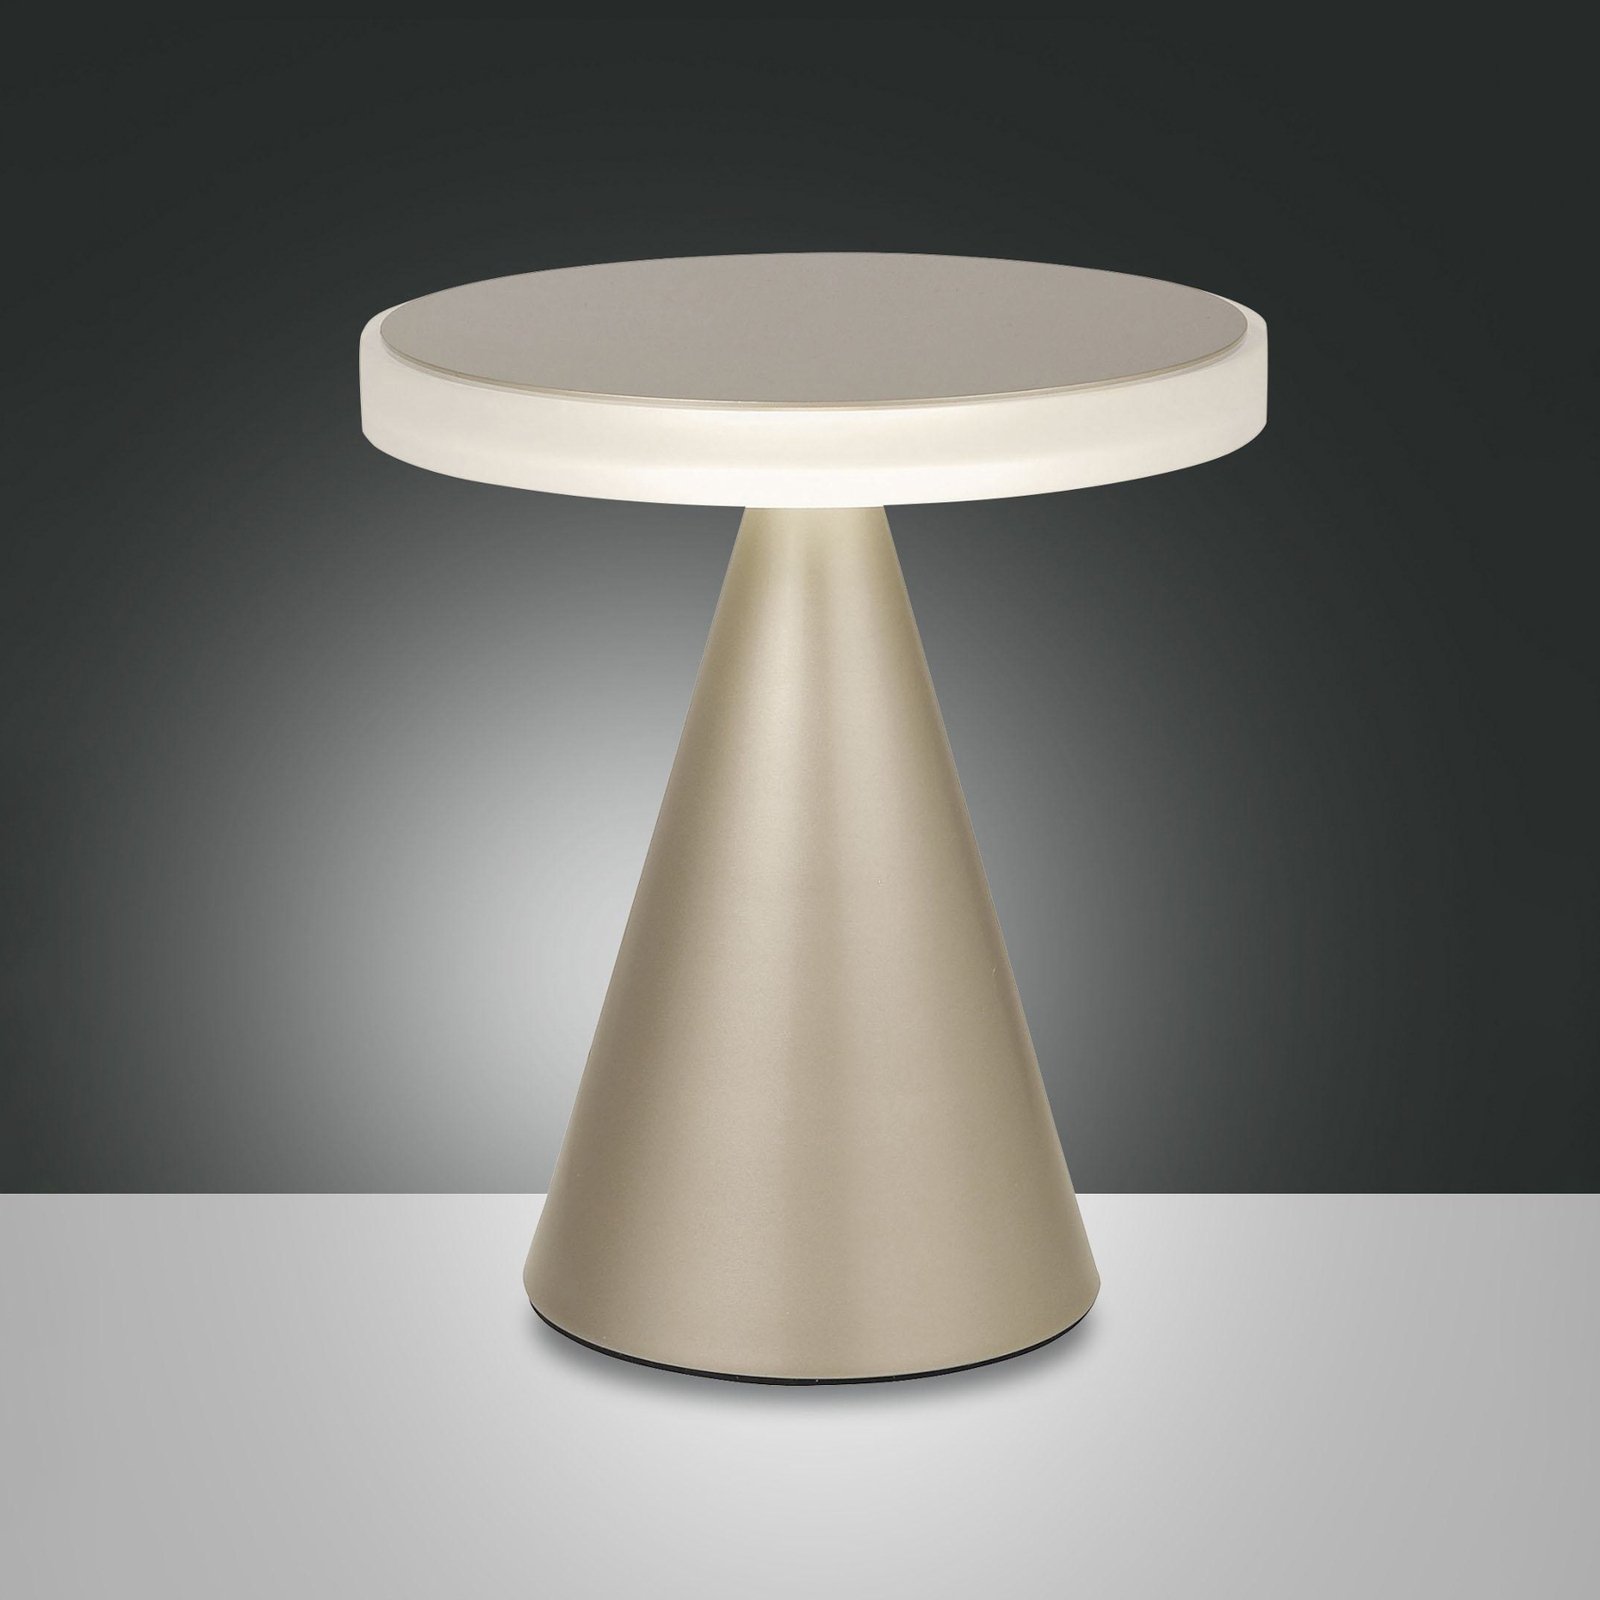 Candeeiro de mesa Neutra LED, altura 27 cm, dourado mate, regulador de